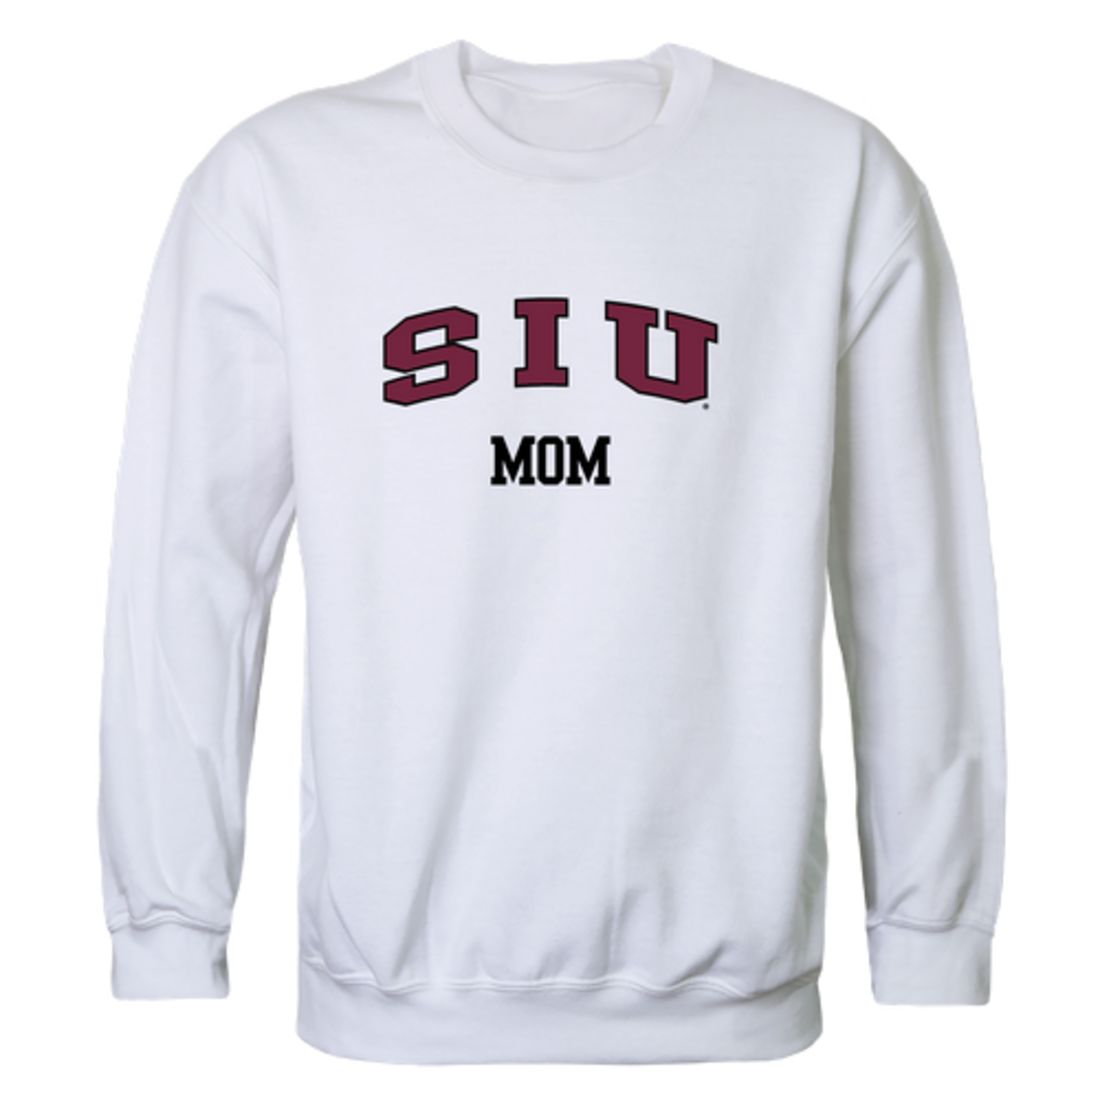 SIU Southern Illinois University Salukis Mom Fleece Crewneck Pullover Sweatshirt Heather Charcoal Small-Campus-Wardrobe